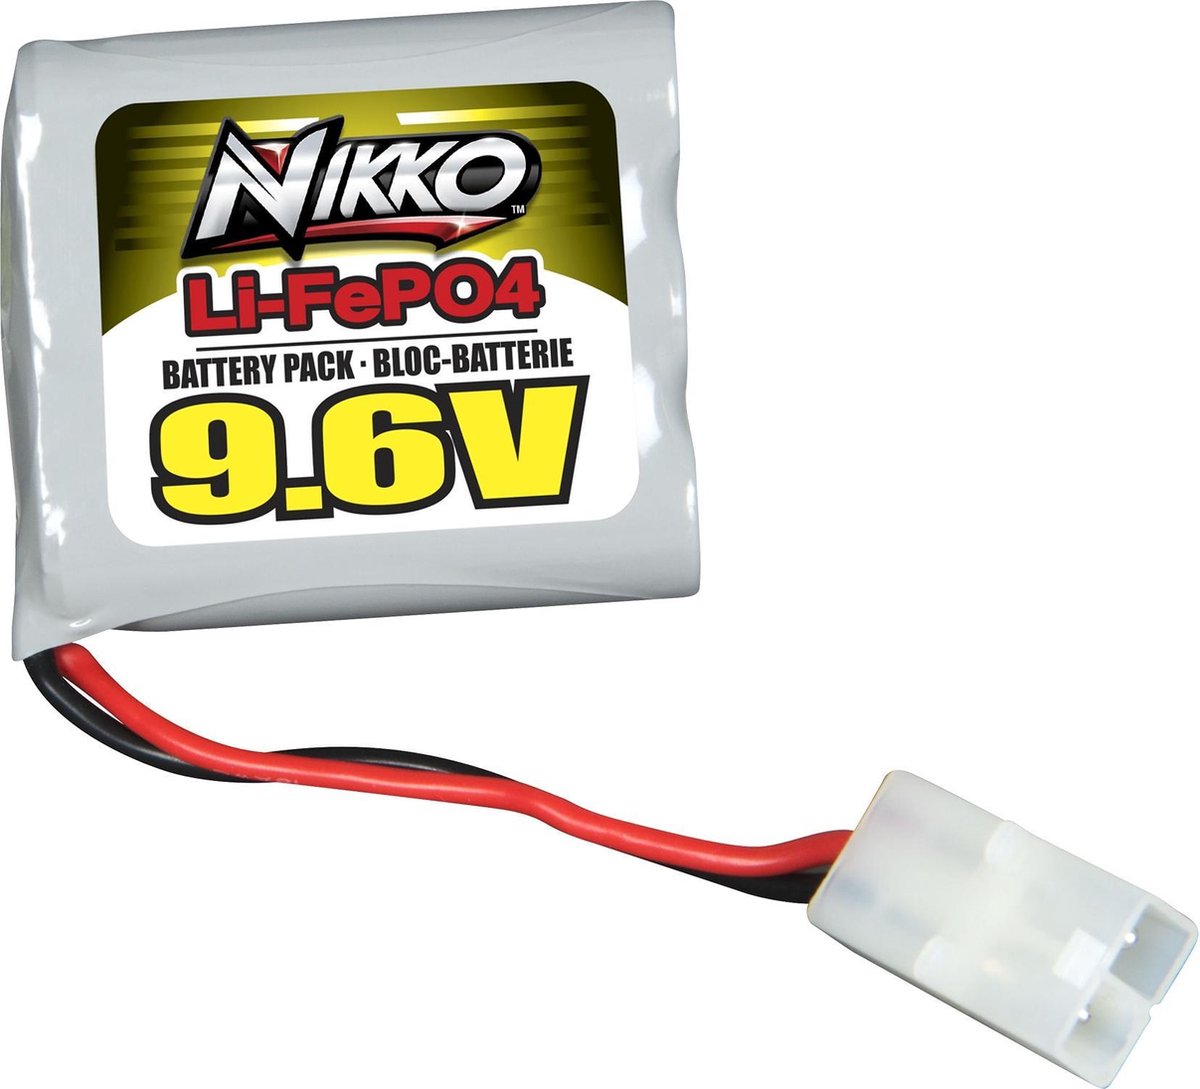 Nikko Li-FePO4 9.6V Mega Pack | bol.com